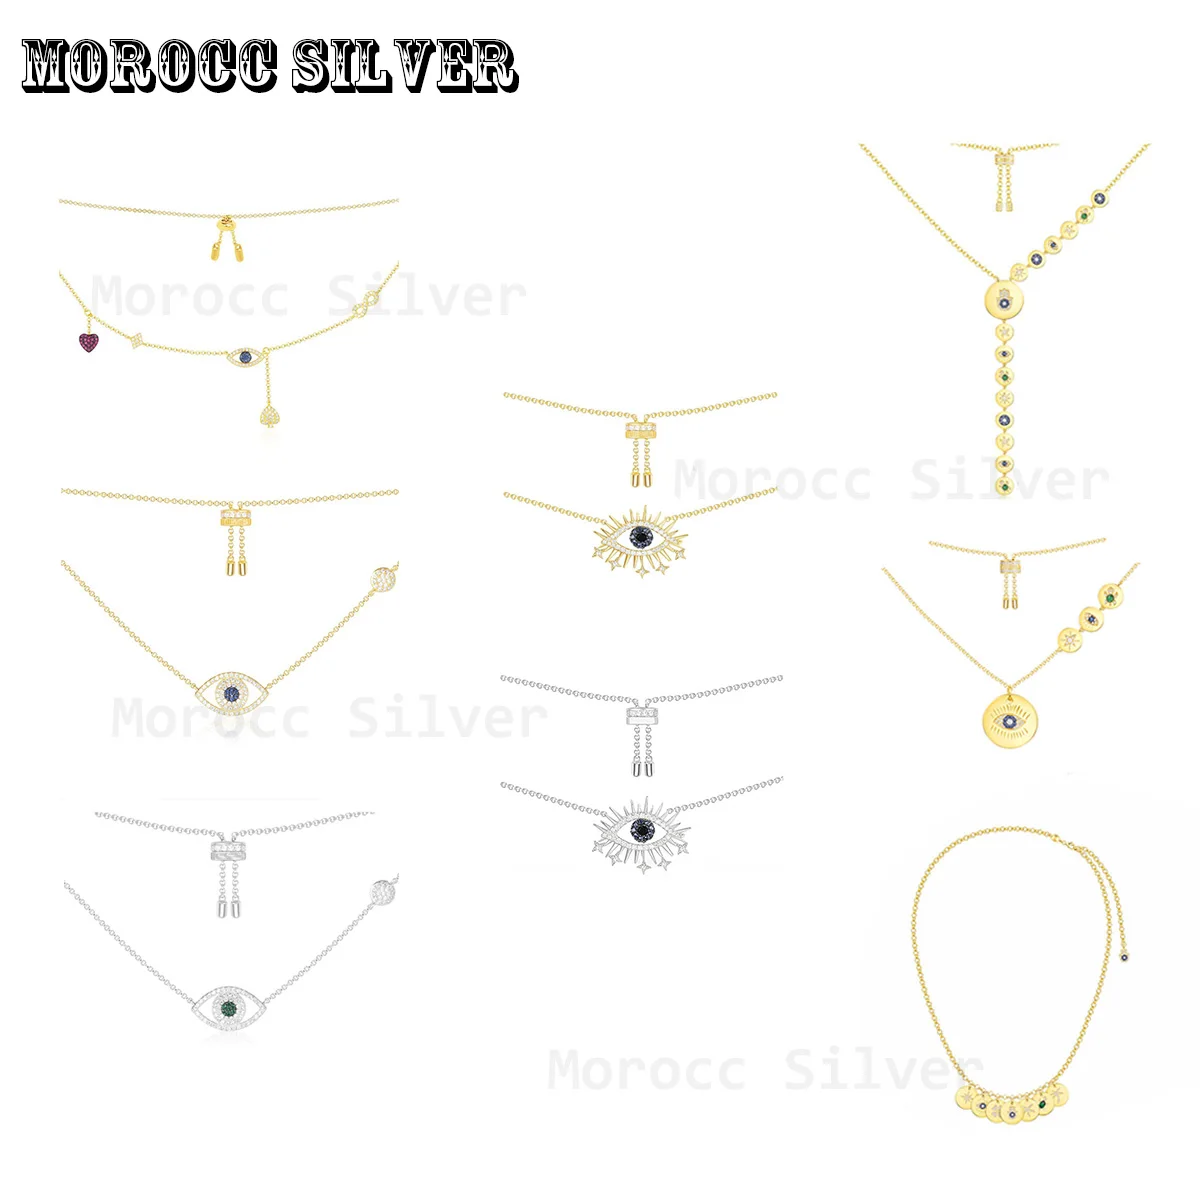 

S925 Silver Jewelry 1:1 Copy, High Quality Classic Inlaid Crystal, Devil Eye Fashion Women's Bracelet